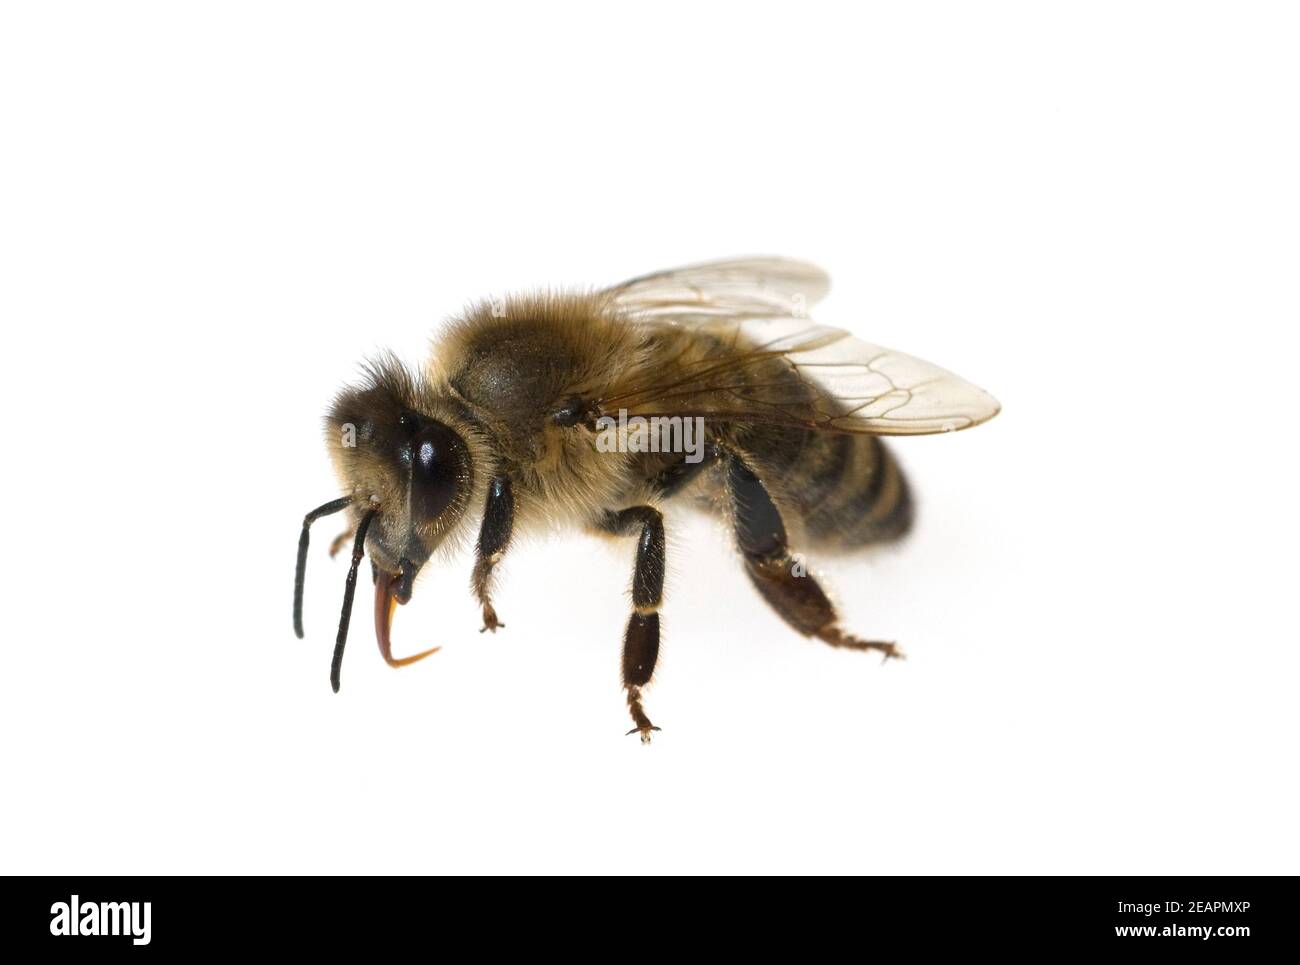 Biene, Apis mellifera  Honigbiene  Insekt Stock Photo